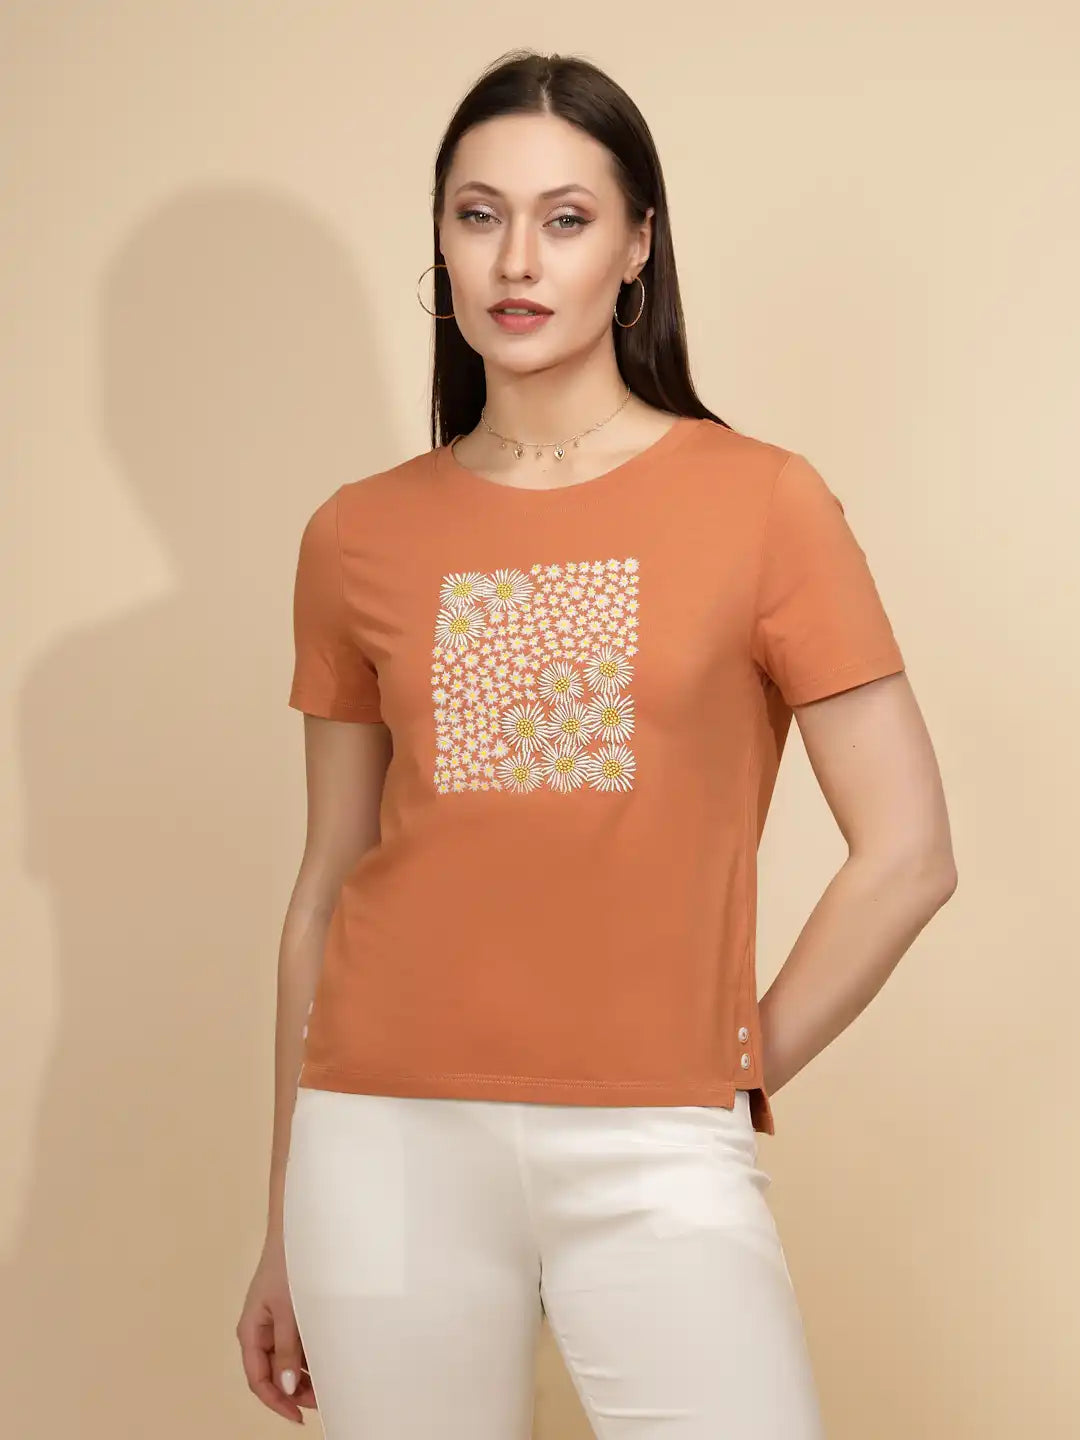 Orange Cotton Regular Fit Top For Women